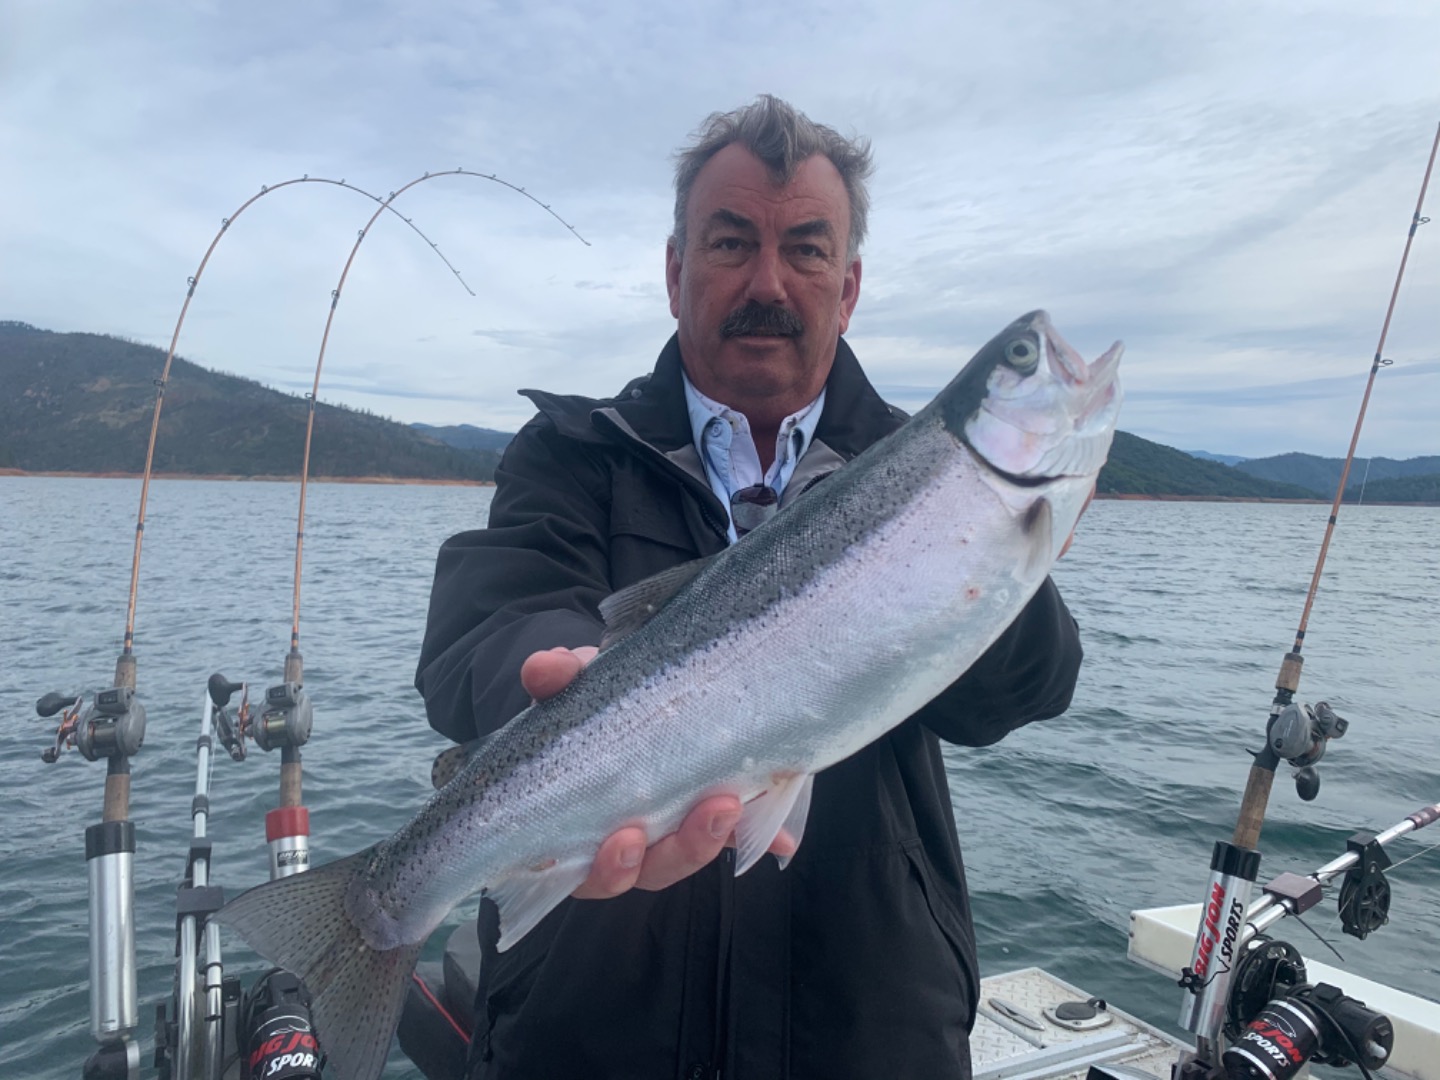 Shasta lake is still producing big rainbow trout